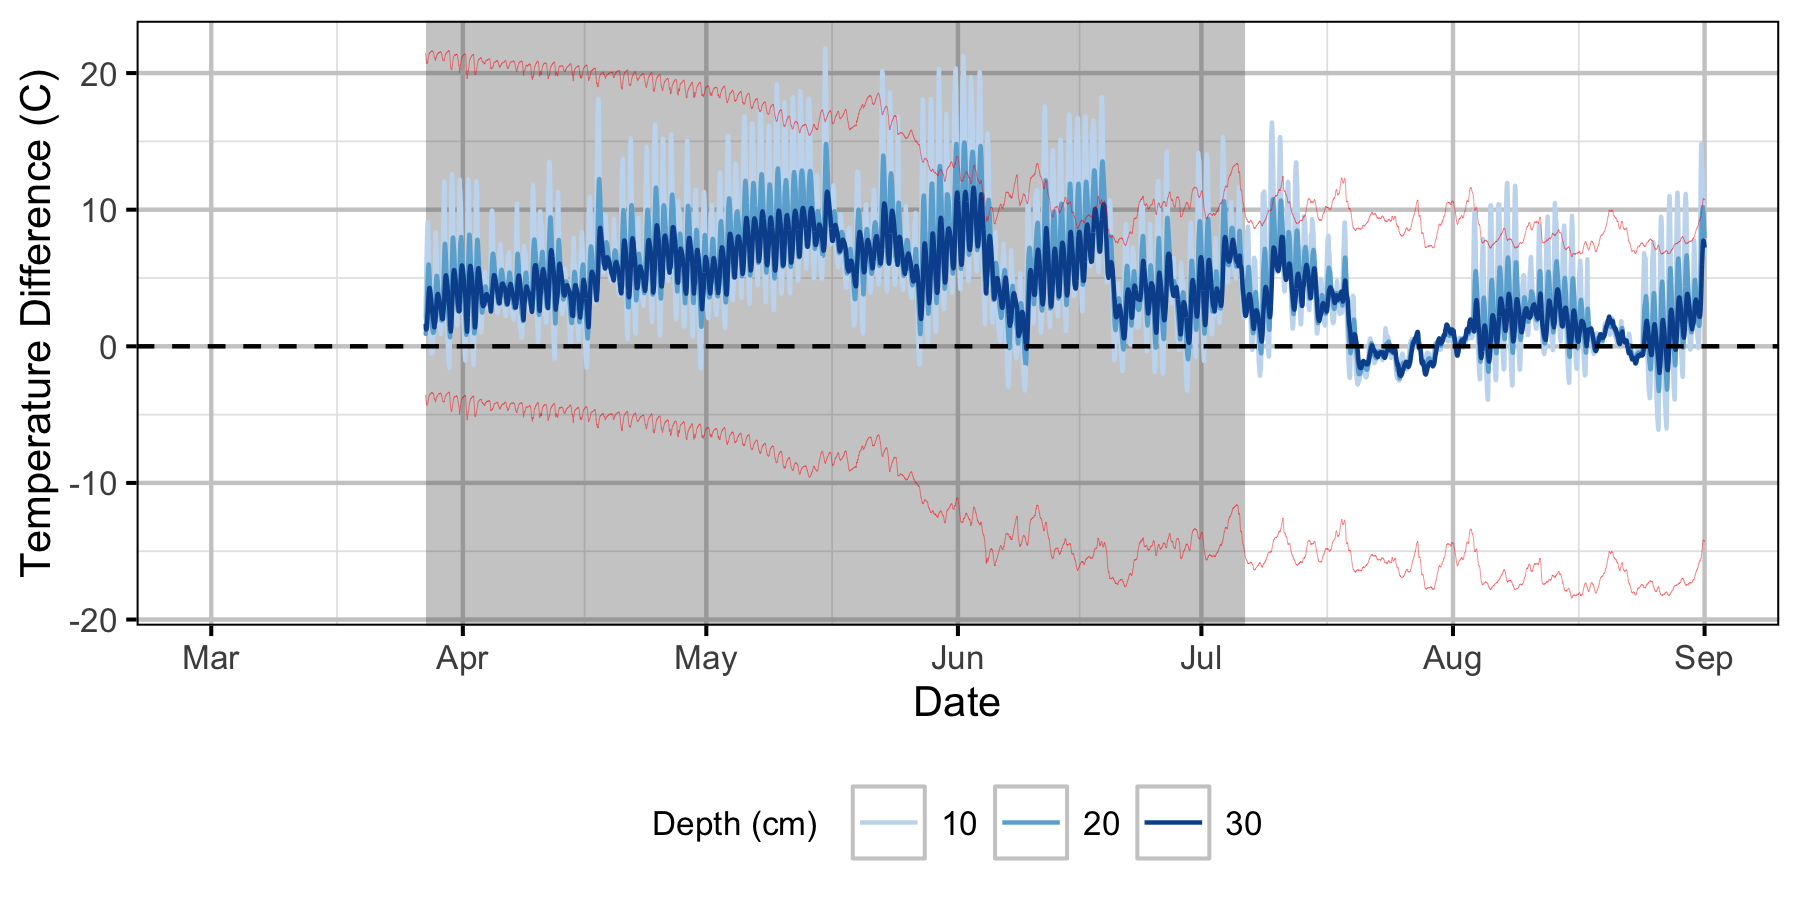 figures/Sensor Data/Relative Gravel Temperature Stations/Norns Creek Fan/Station08.png